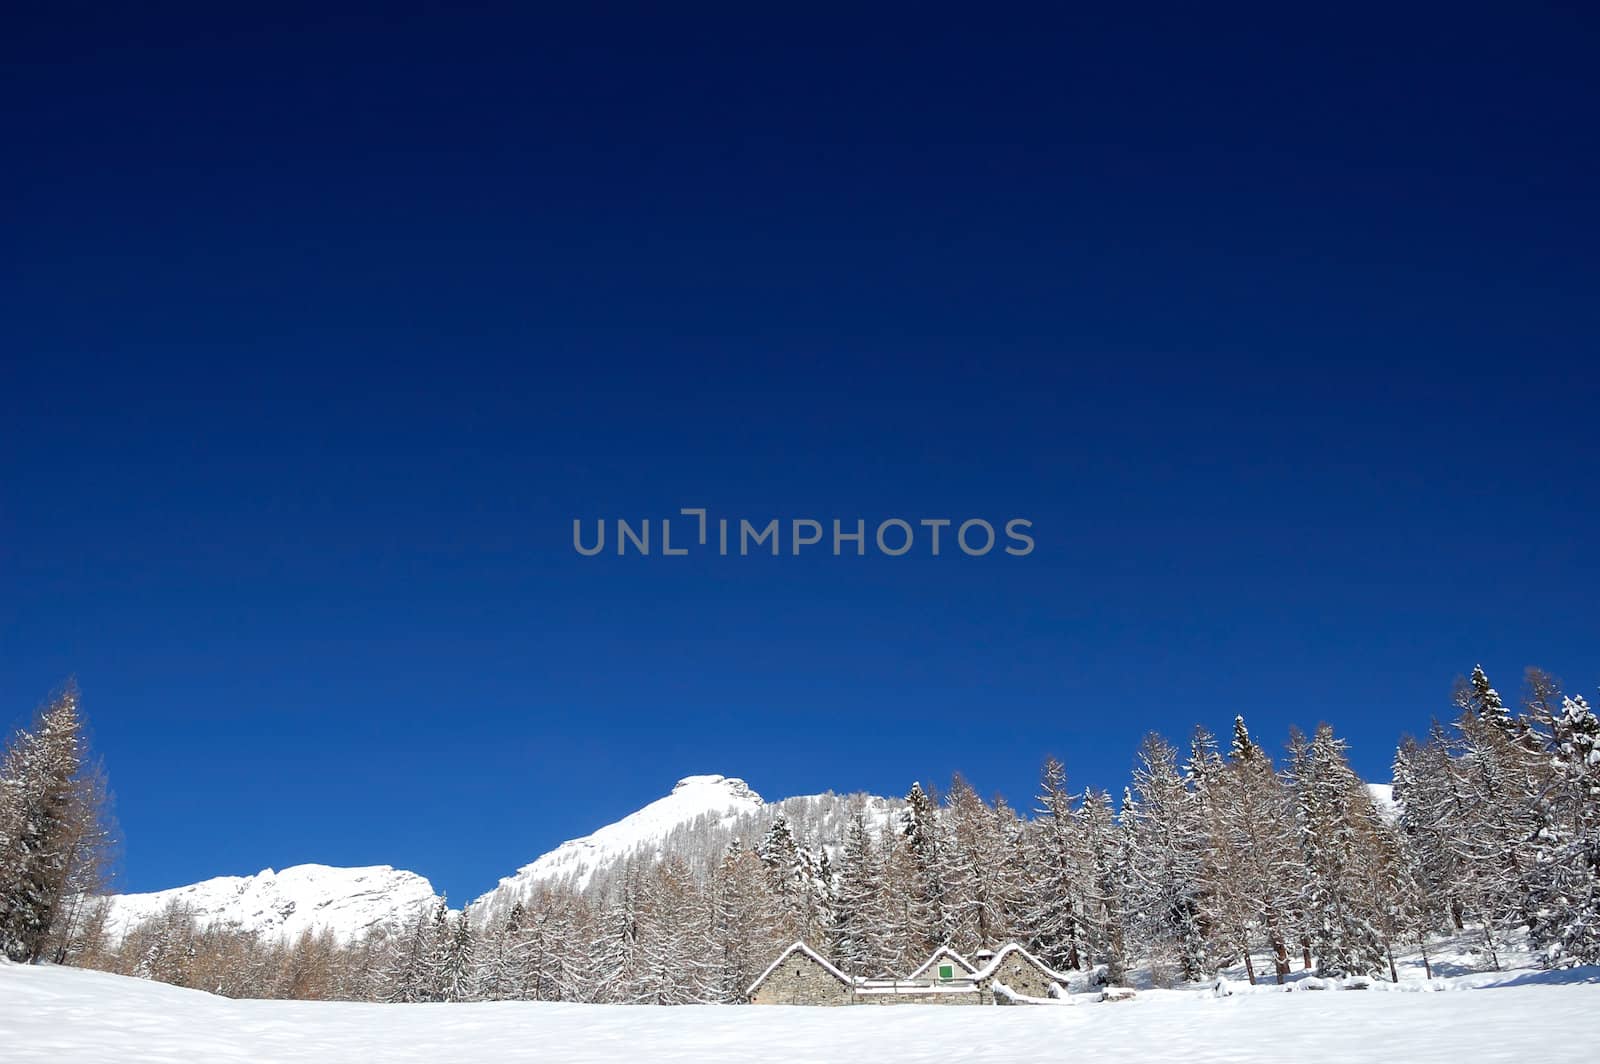 blue sky over snowy mountain by aletermi